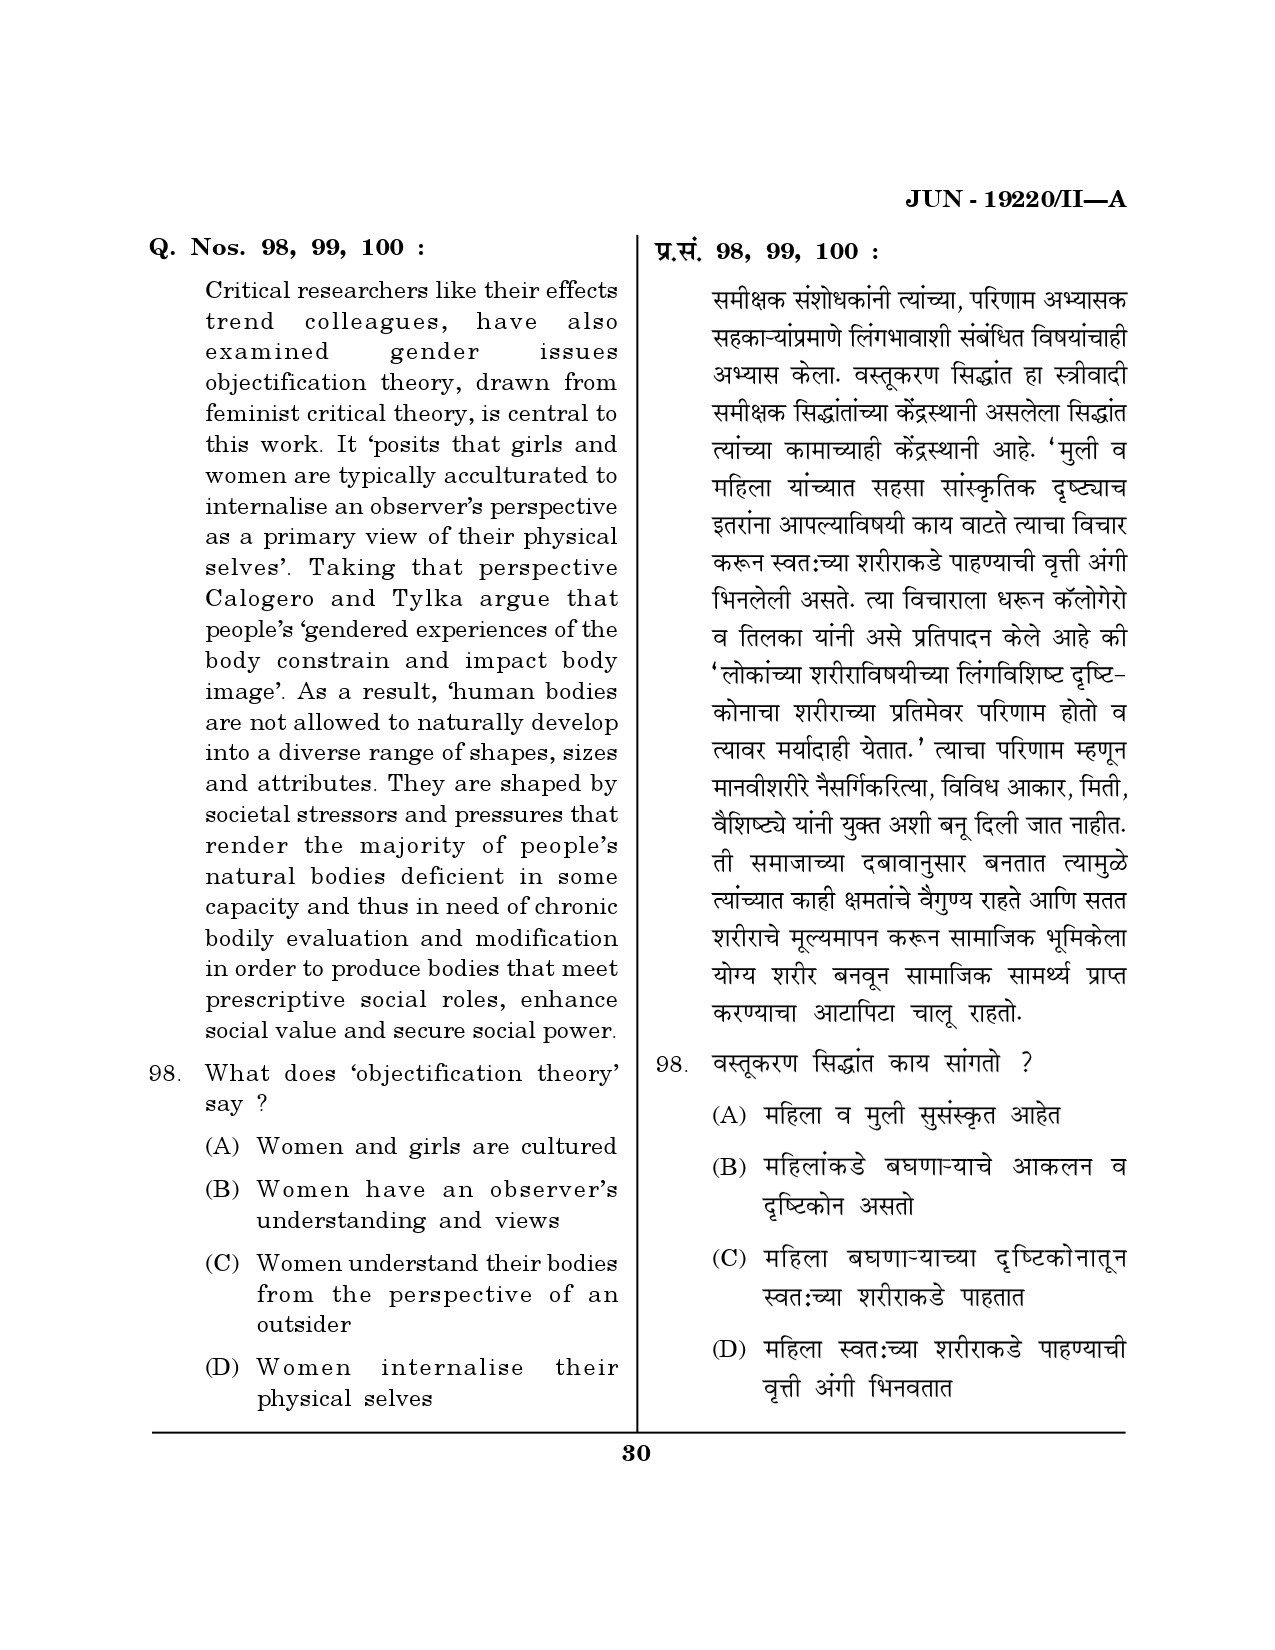 Maharashtra SET Journalism and Mass Communication Question Paper II June 2020 29